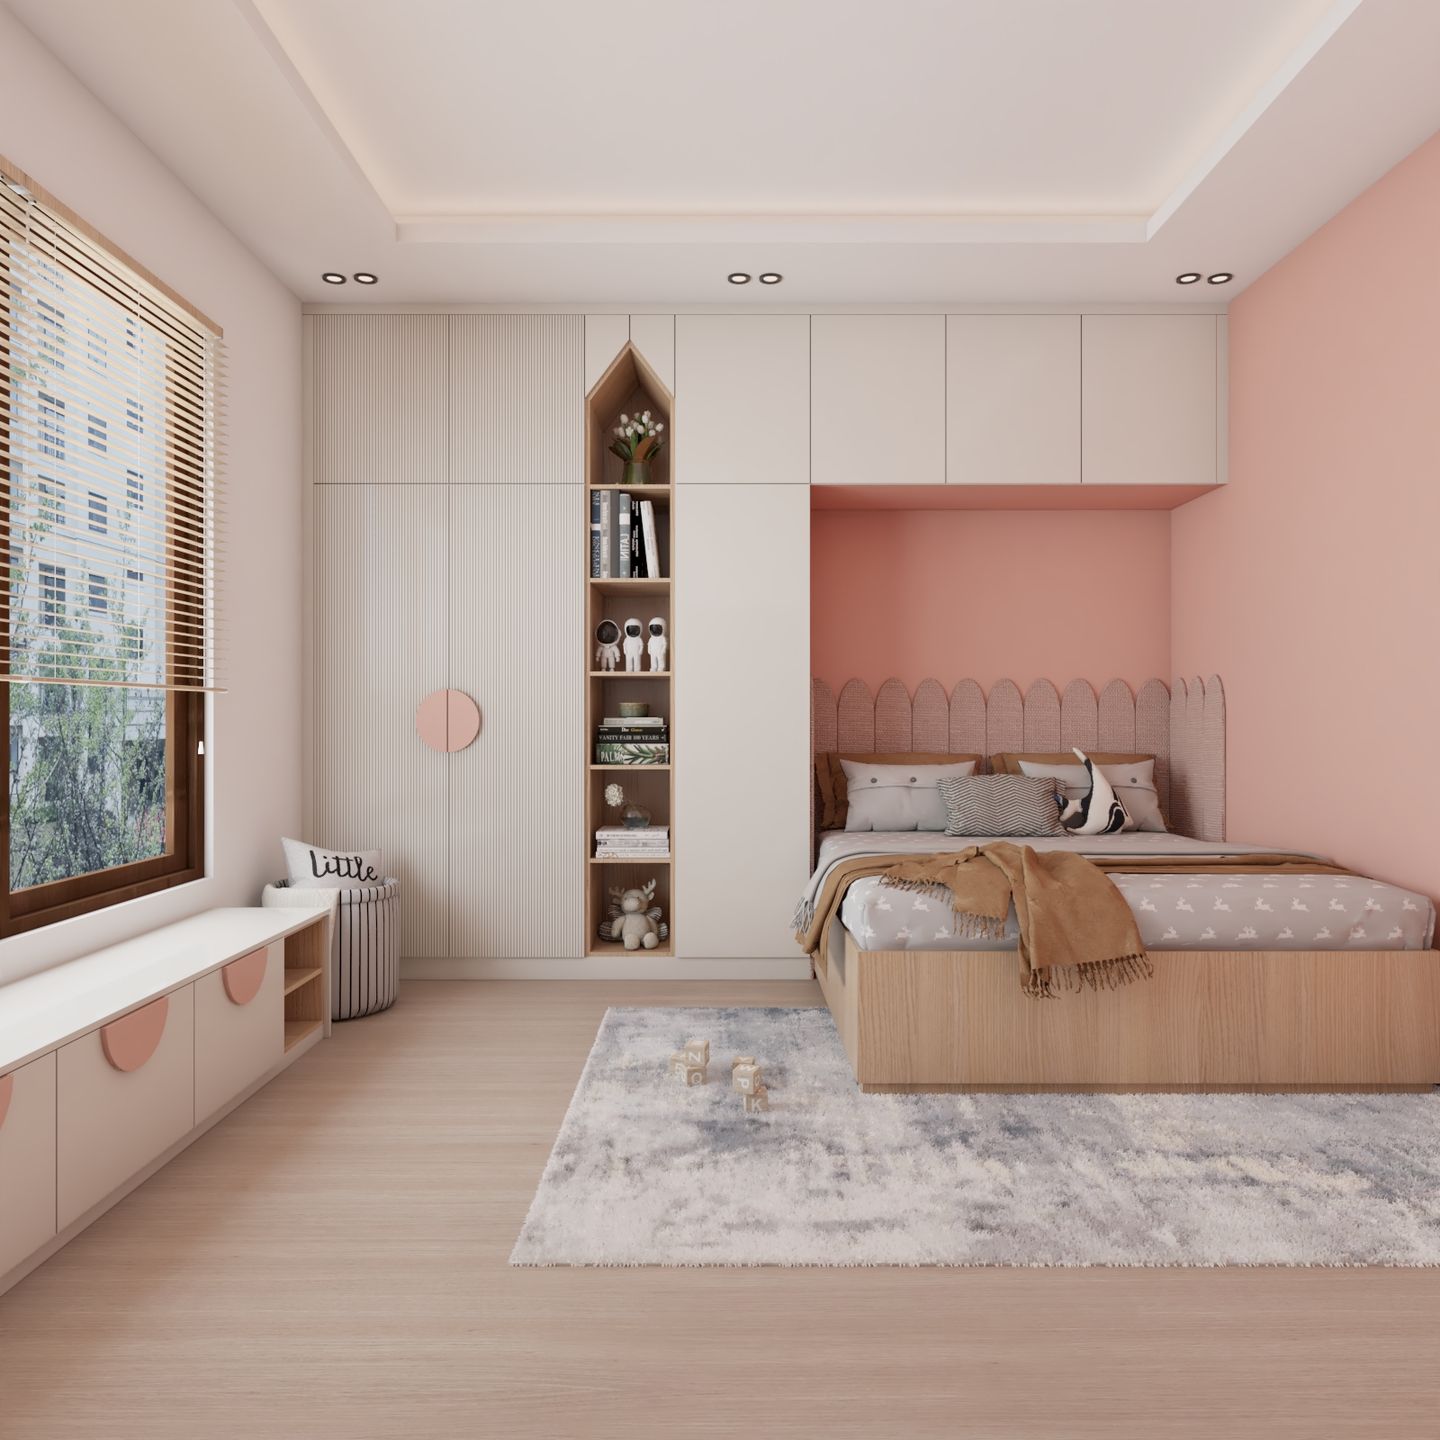 Peach And White Kids Room Design With 3-Door Swing Wardrobe - Livspace